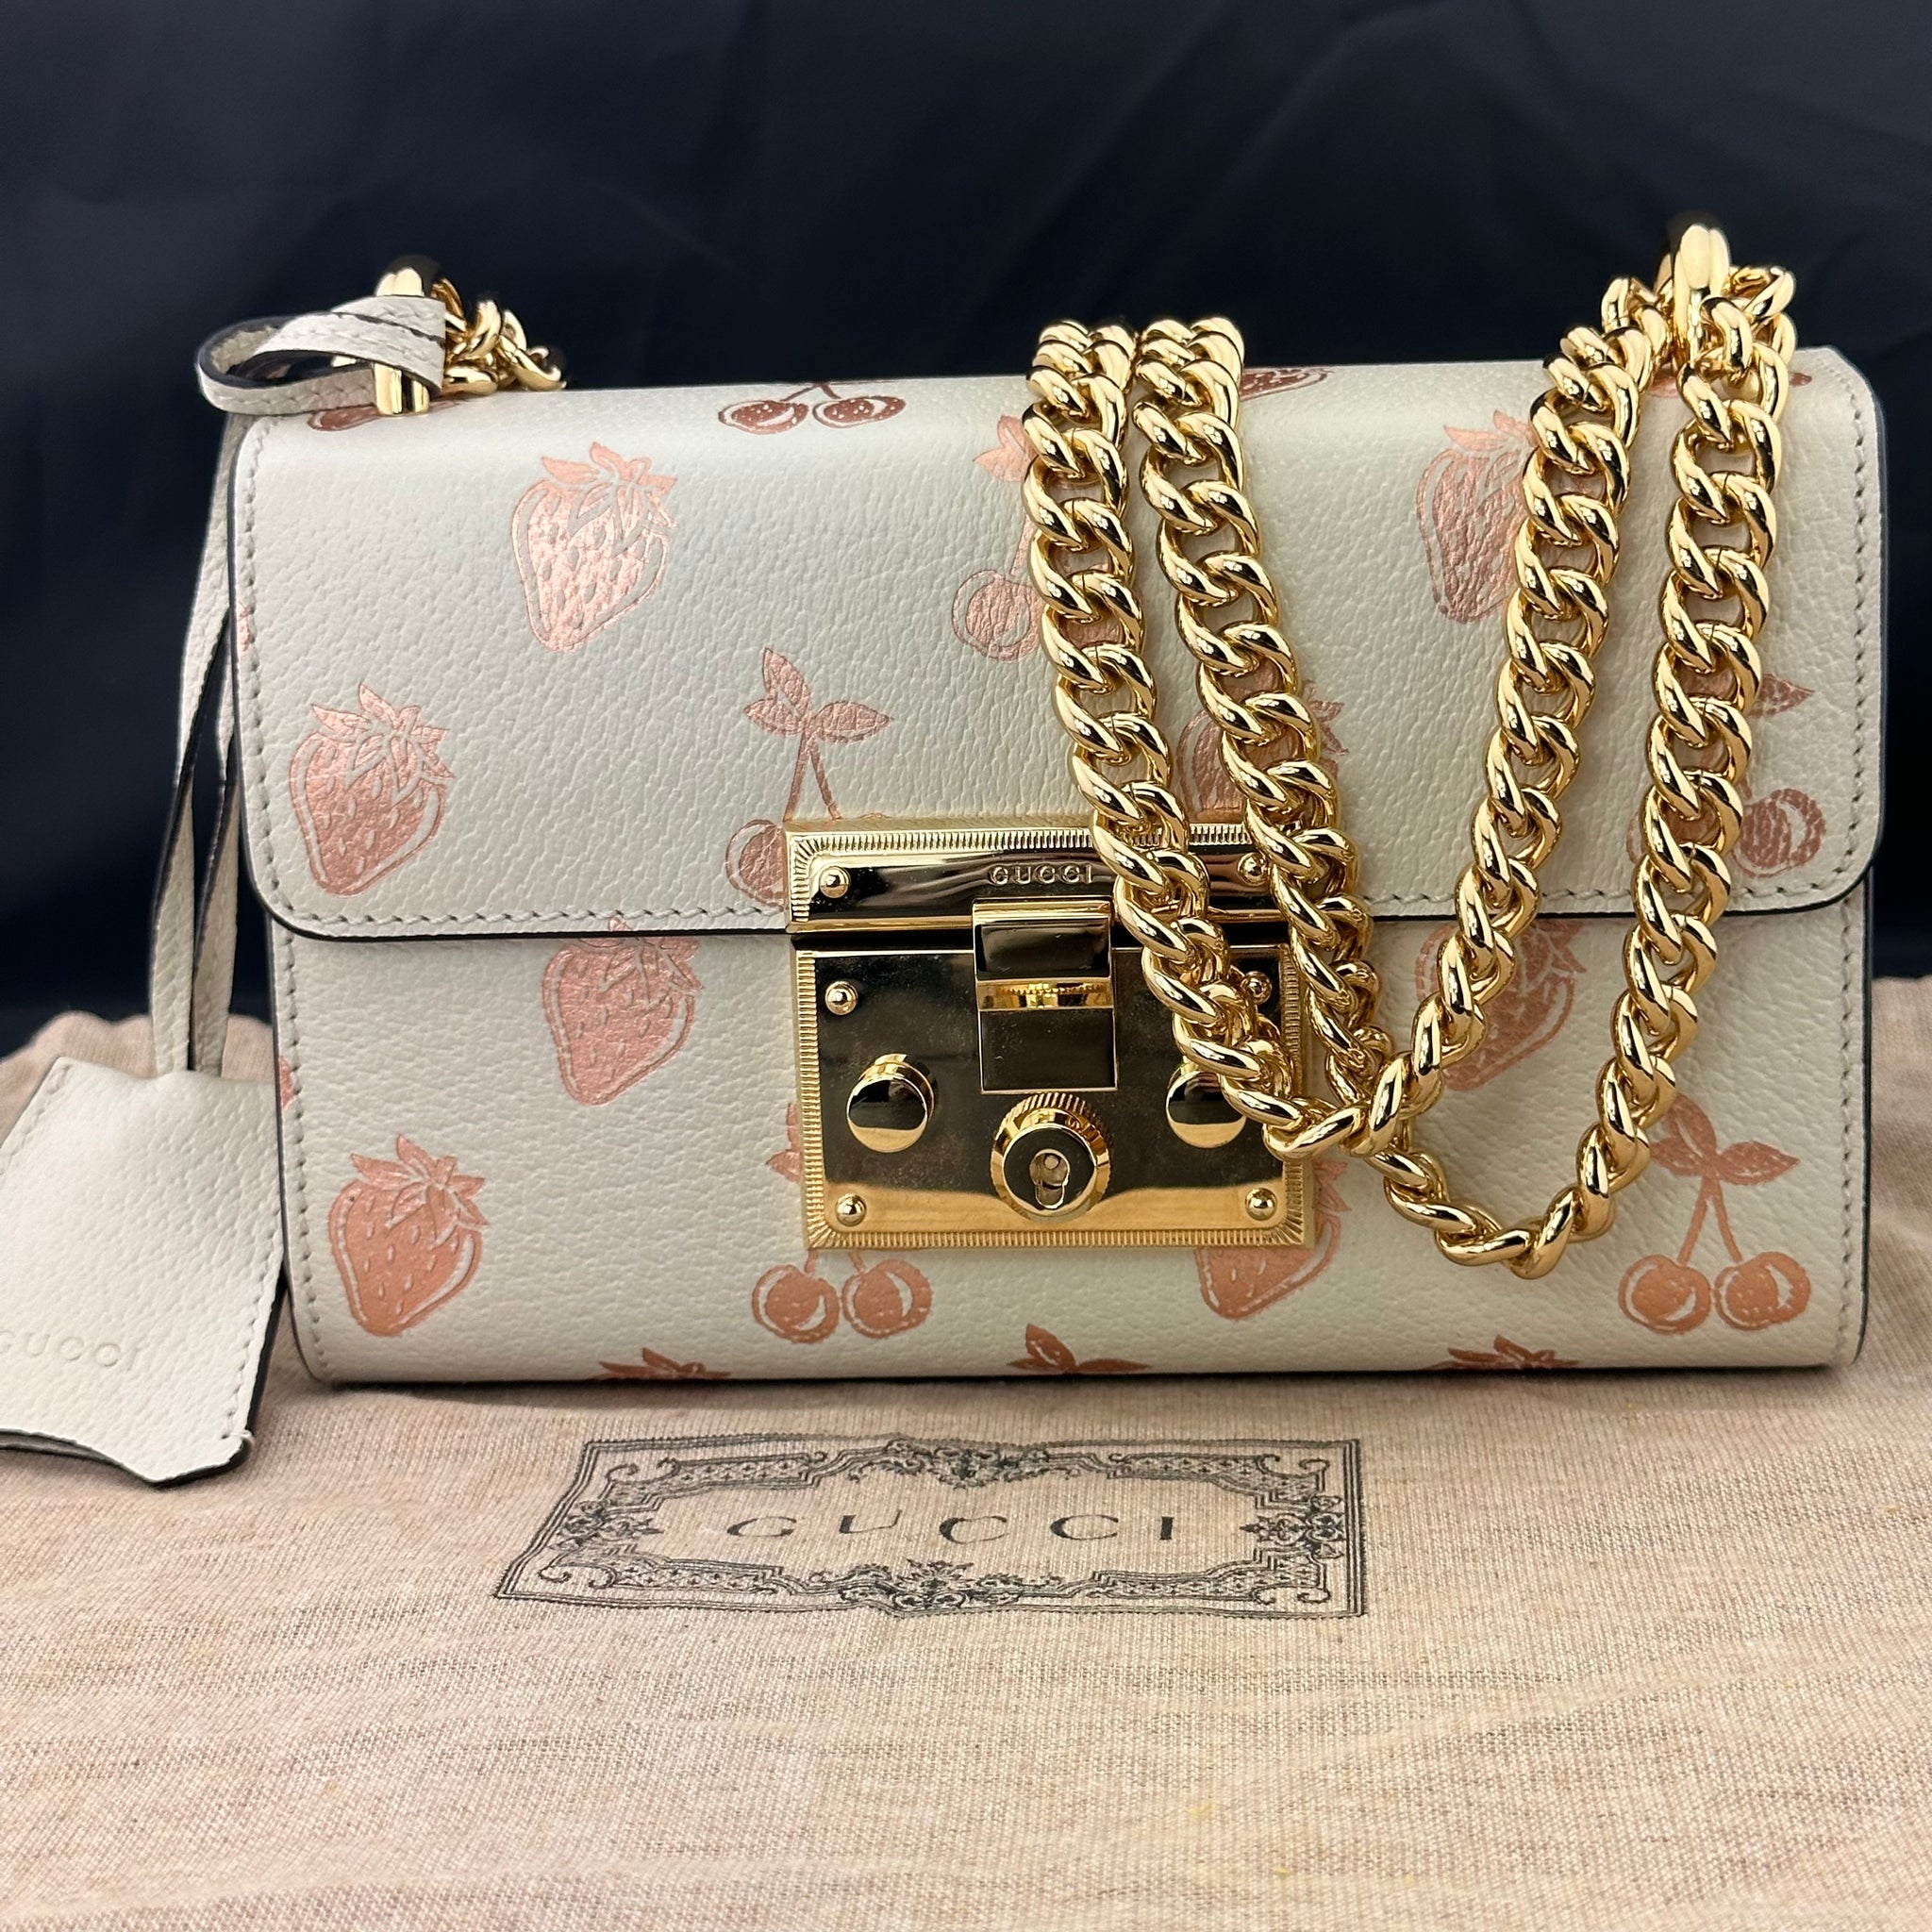 Gucci Padlock Small GG Supreme Canvas Shoulder Handbag